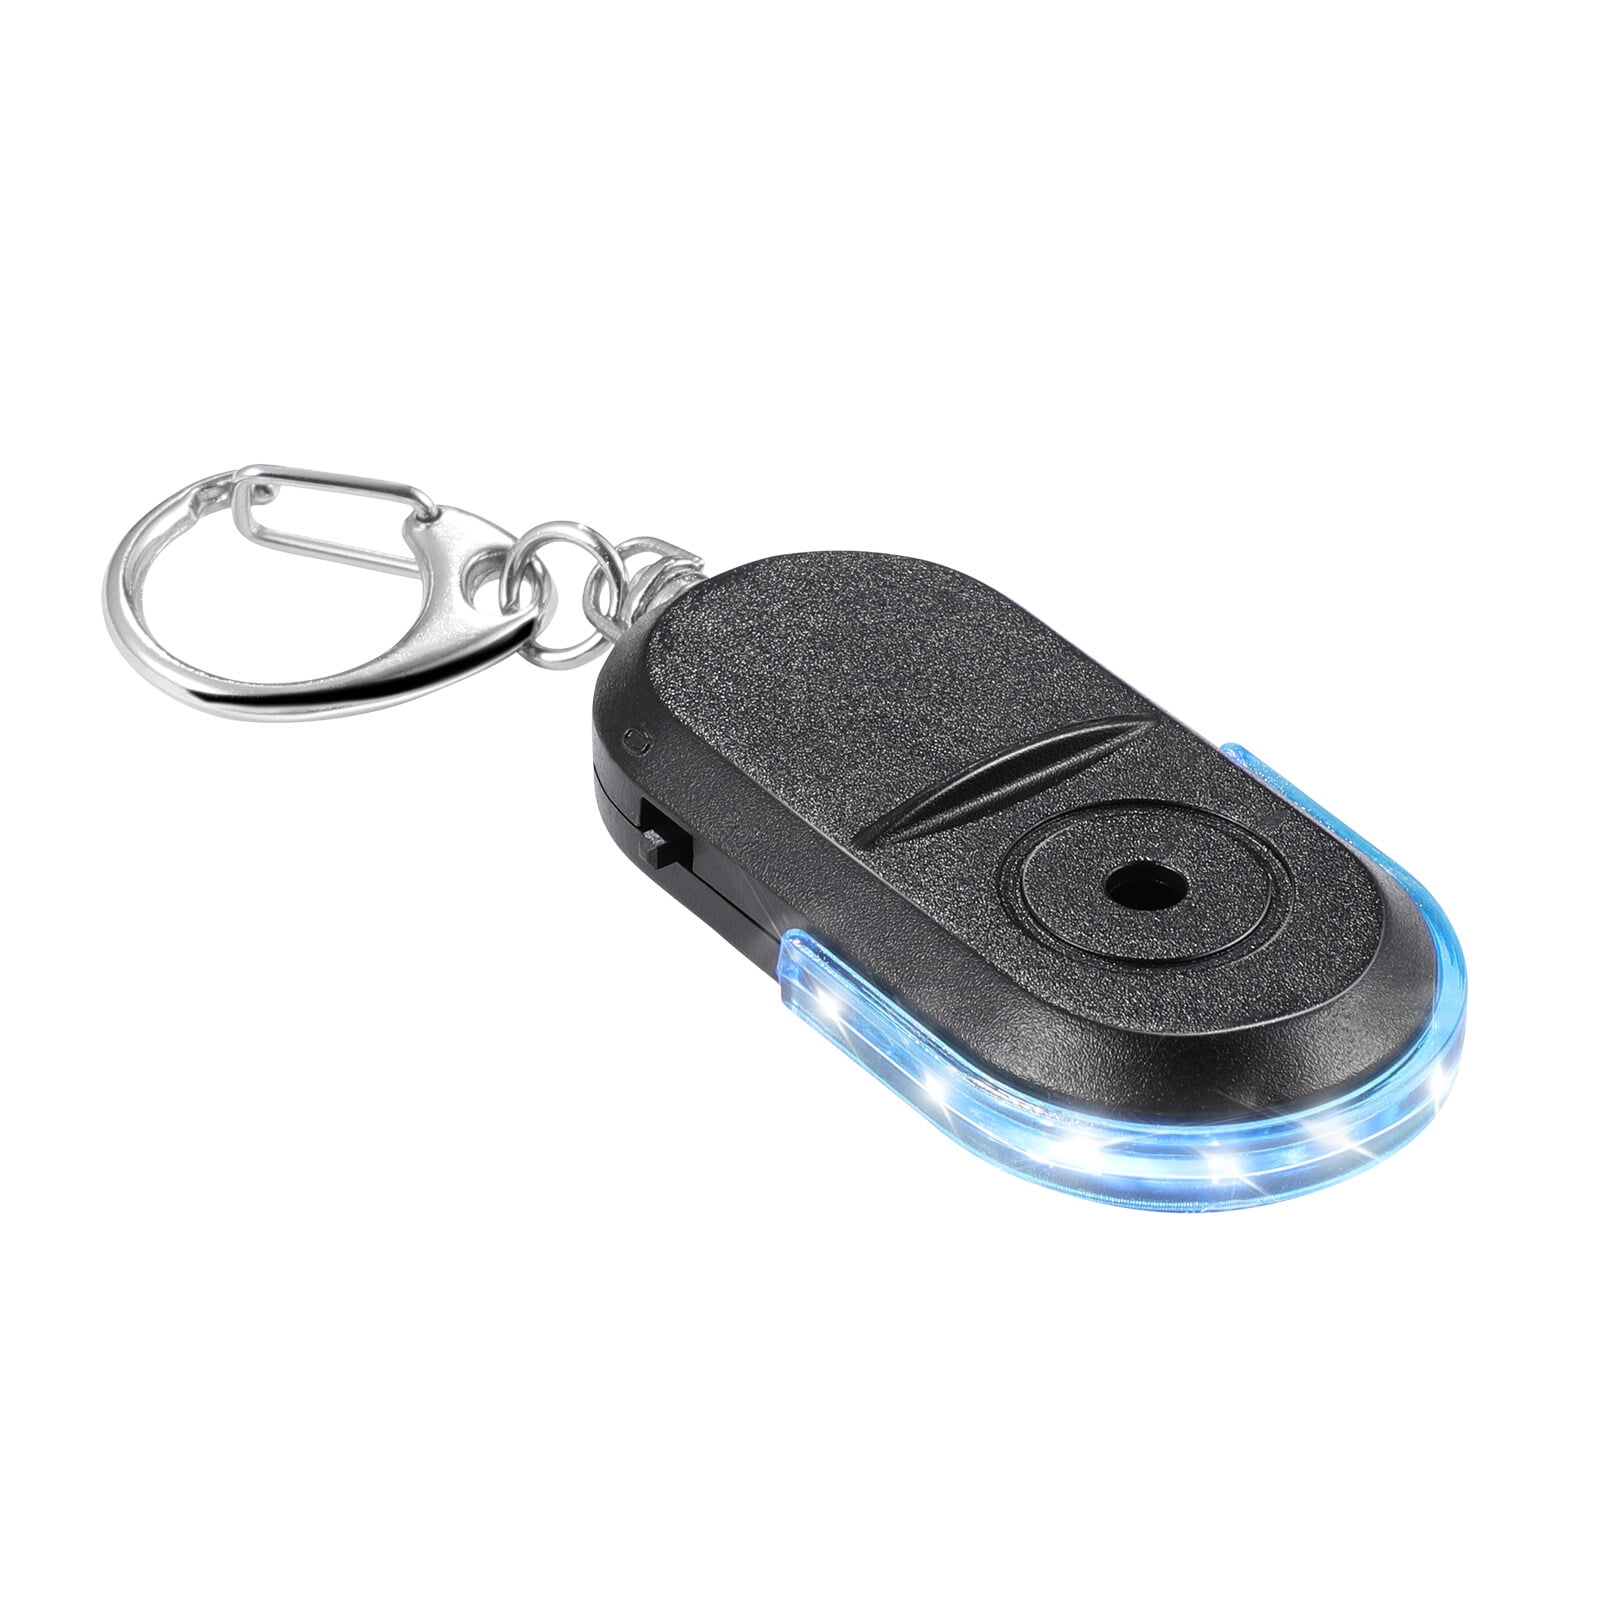 WHISTLE LOST KEY Finder LED Flash Beep Locator Keyring Chain for Keys Purse  $7.16 - PicClick AU